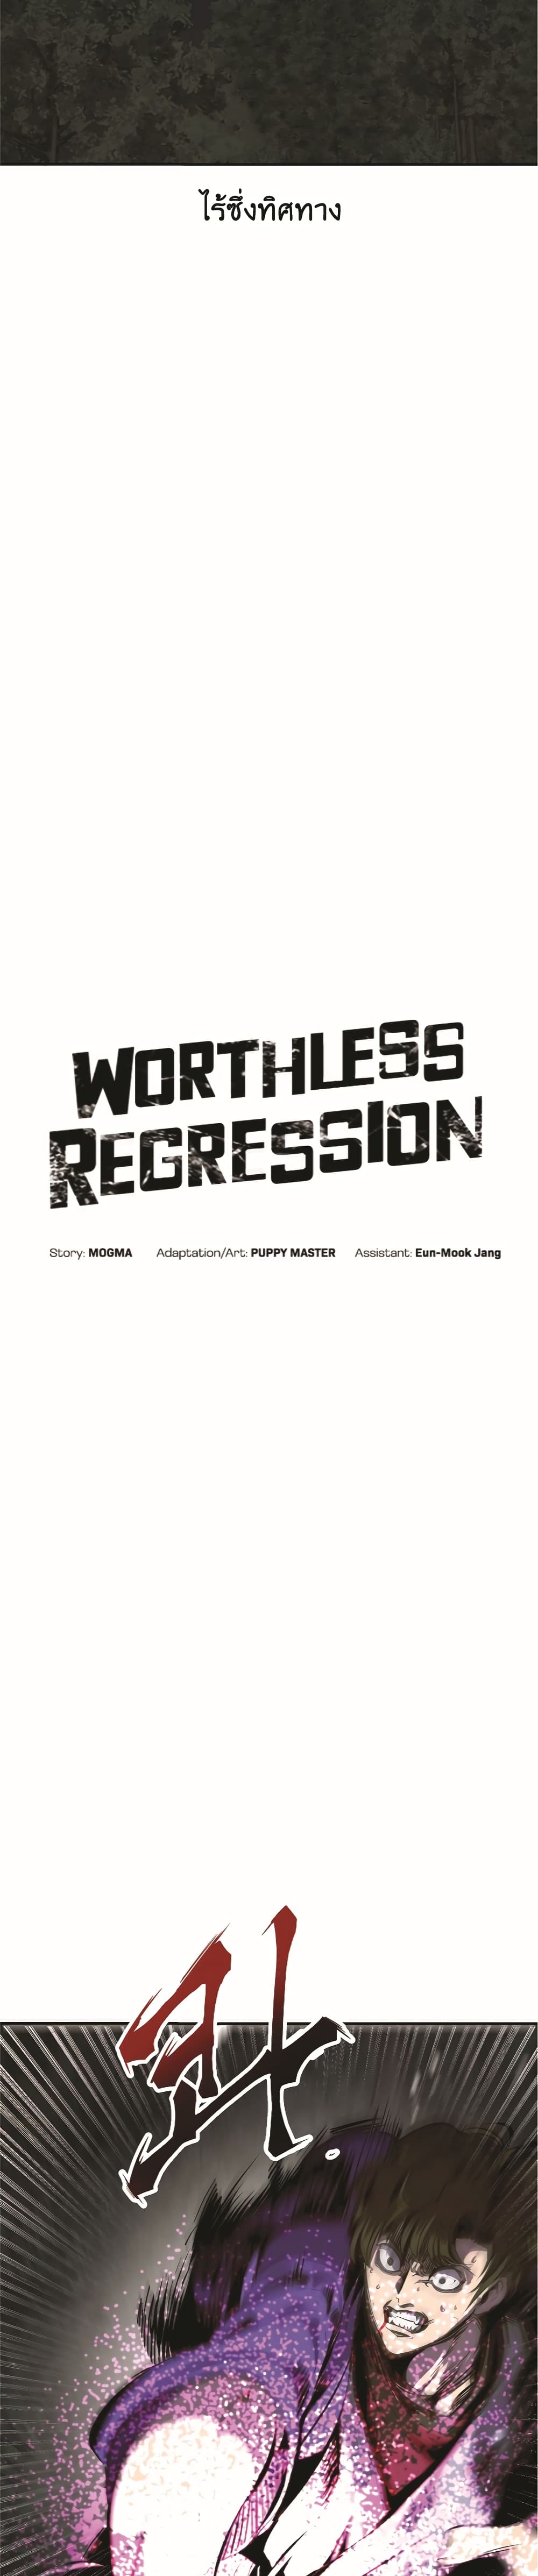 Worthless Regression ตอนที่ 47 (6)